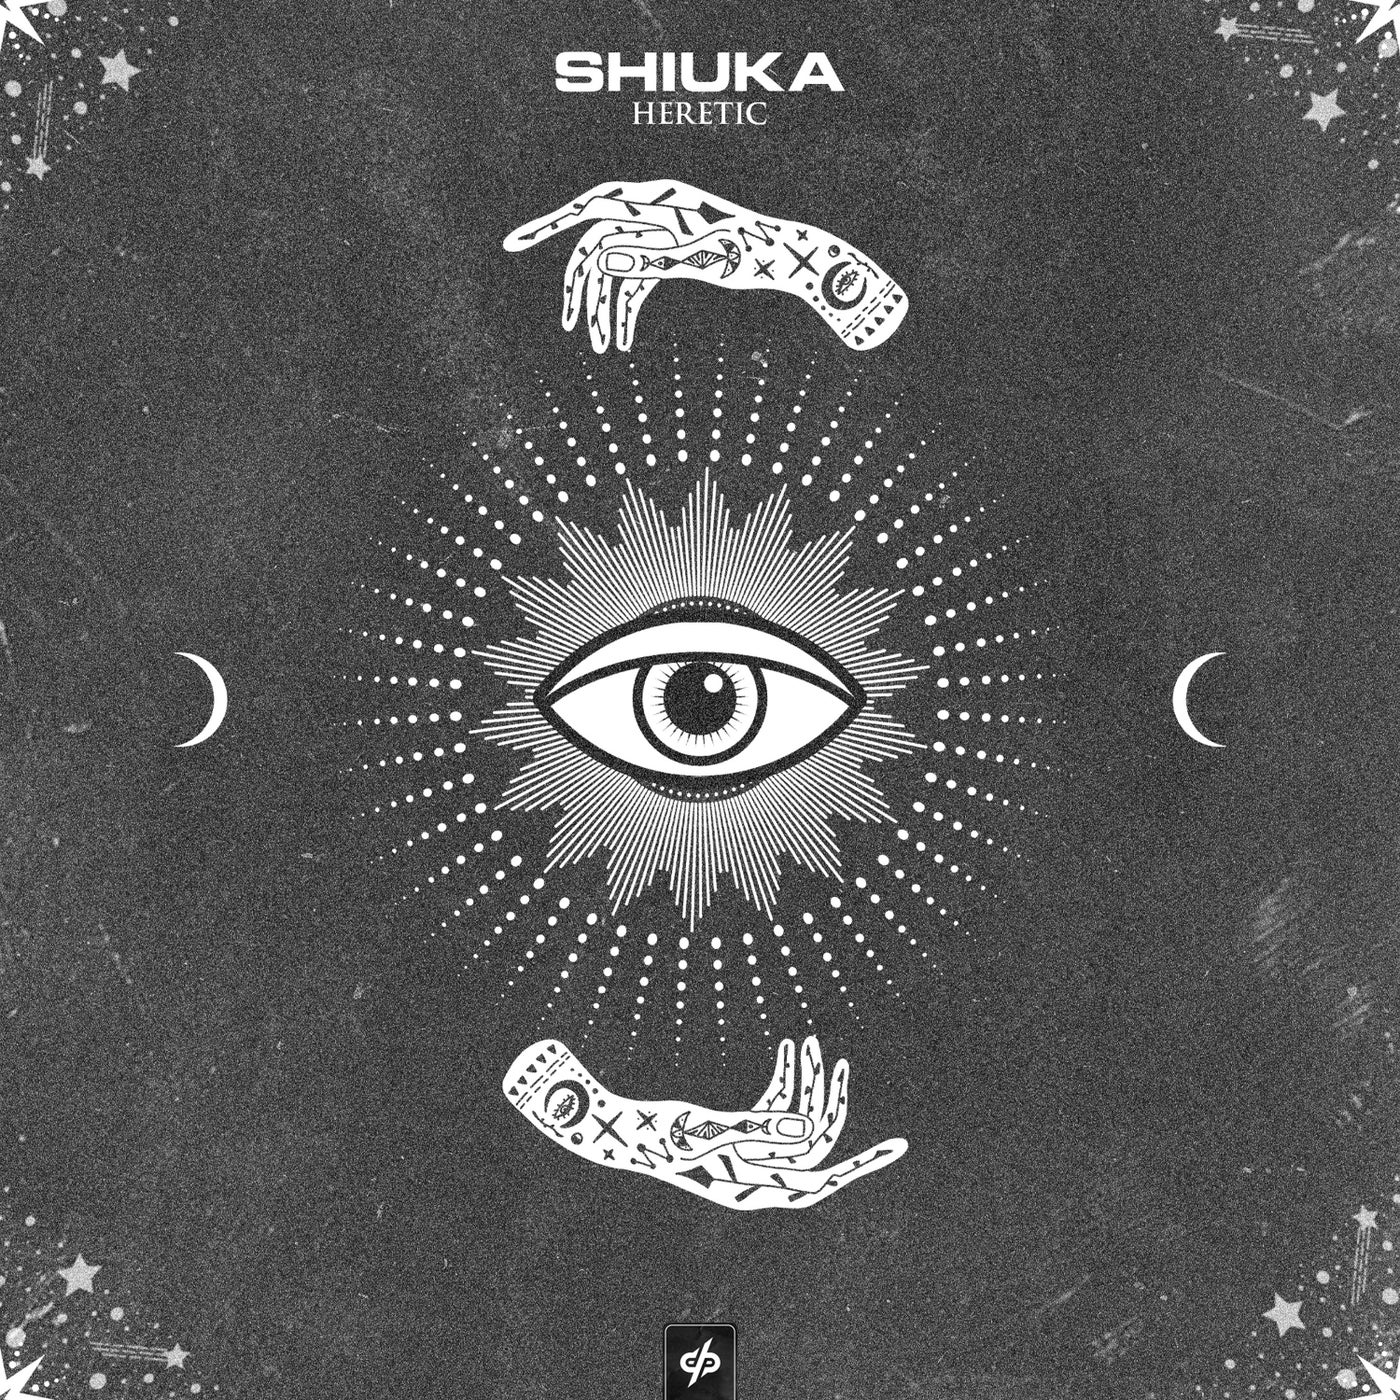 Shiuka music download - Beatport